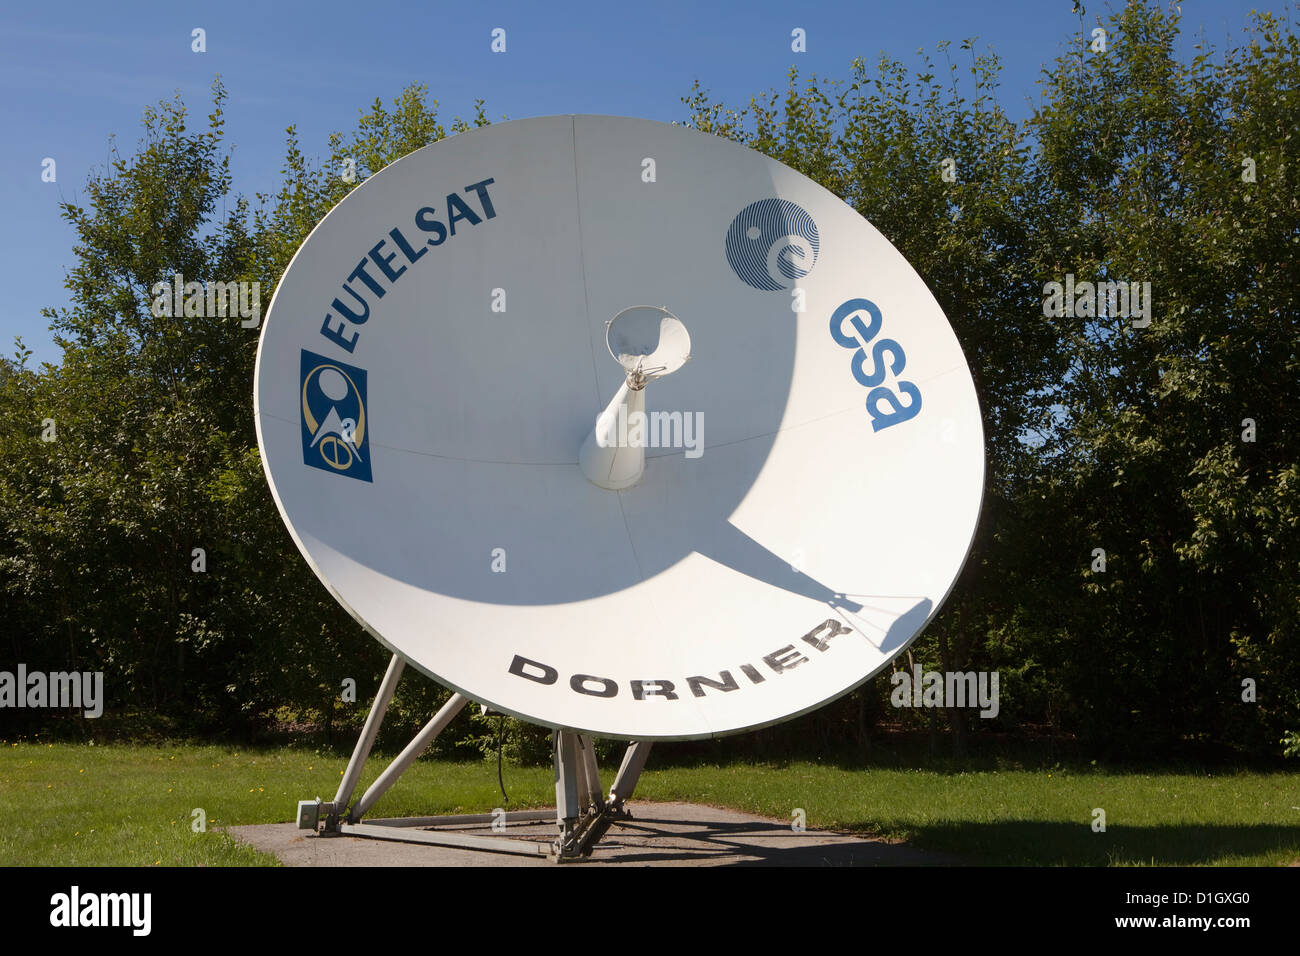 Antenna parabolica delle comunicazioni europee via satellite, ECS per comunicazioni satelliti gestiti da Eutelsat, degli anni ottanta Foto Stock